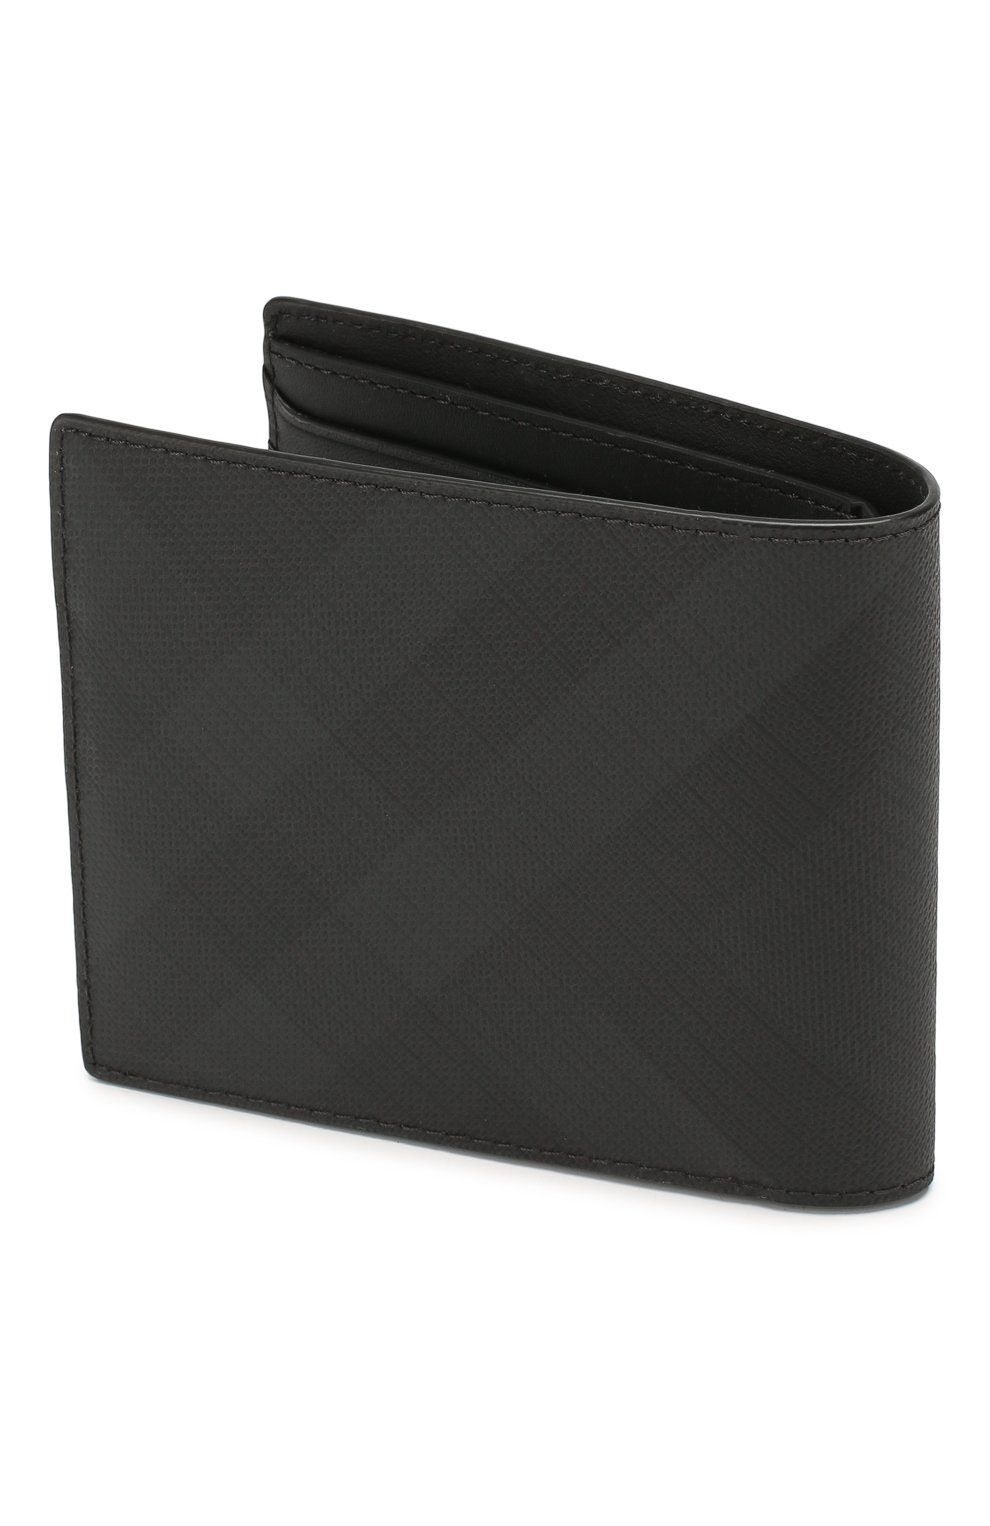 Мужской комплект из портмоне и футляра для кредитных карт BURBERRY темно-серого цвета, арт. 8014527 | Фото 2 (Материал: Текстиль, Пластик)